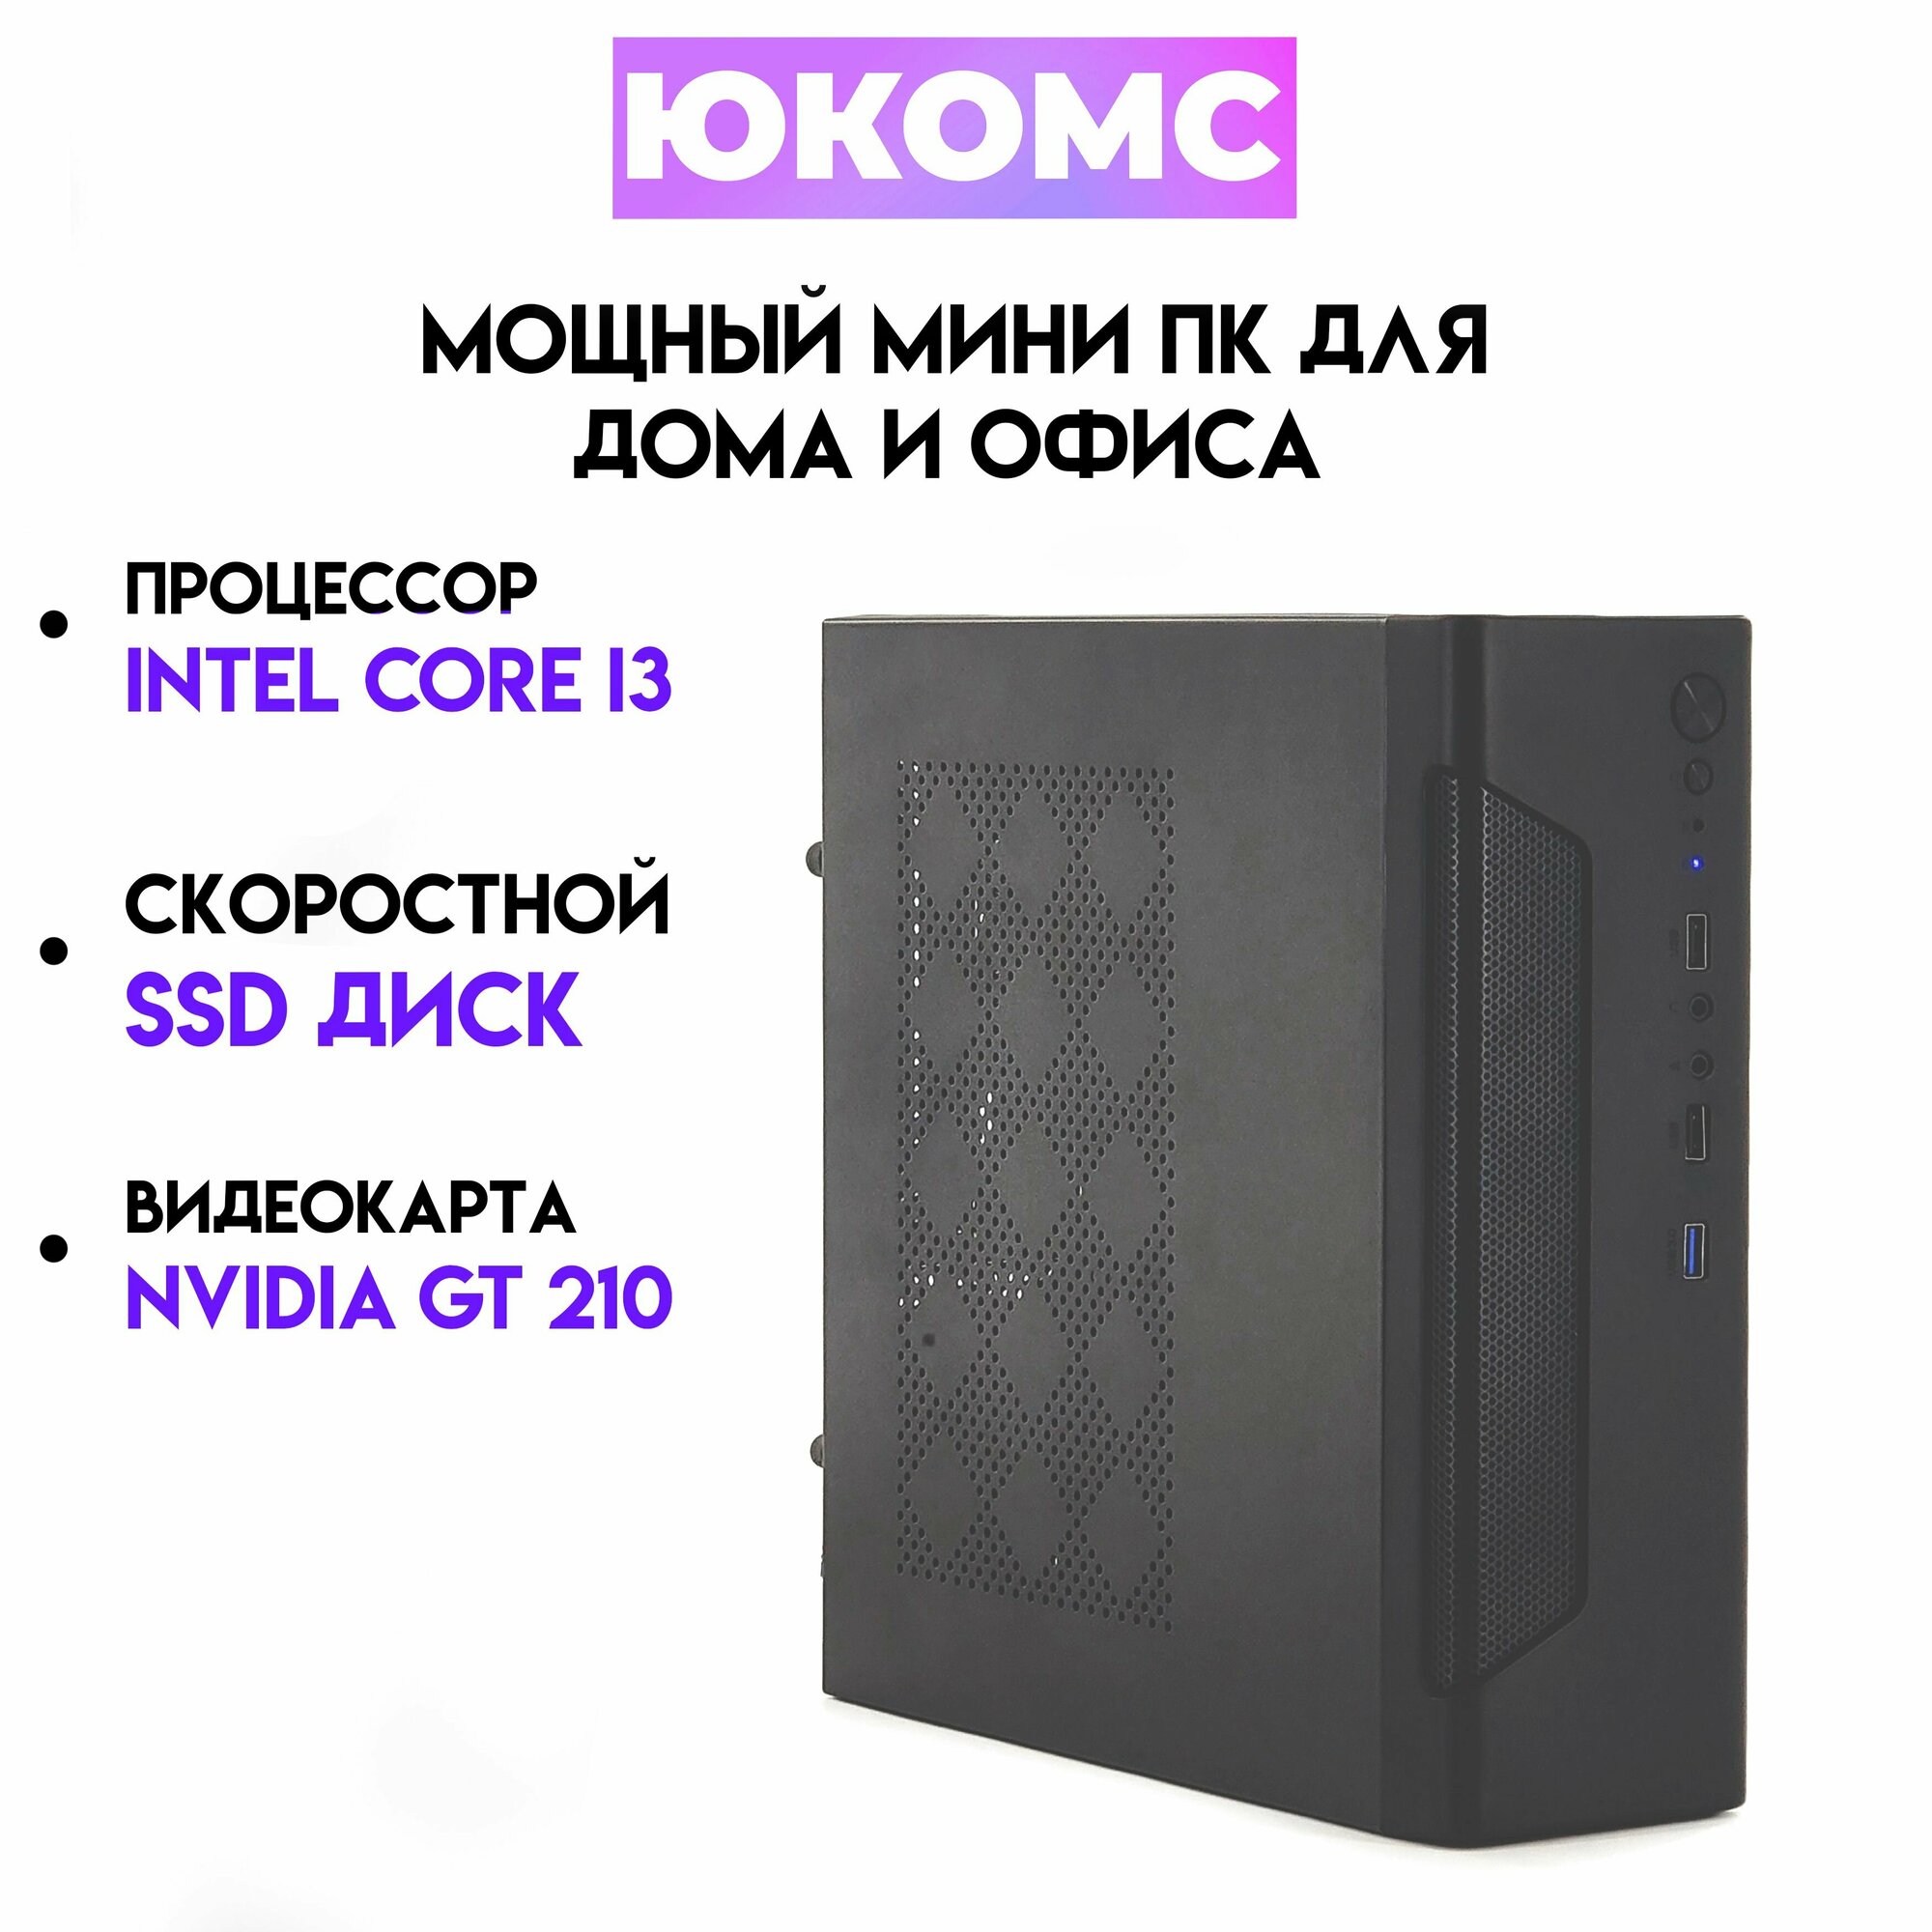 Мини PC юкомс Core i3 4150, GT 210 1GB, SSD 240GB, HDD 1TB, 4gb DDR3, БП 200w, win 10 pro, Exegate mini case